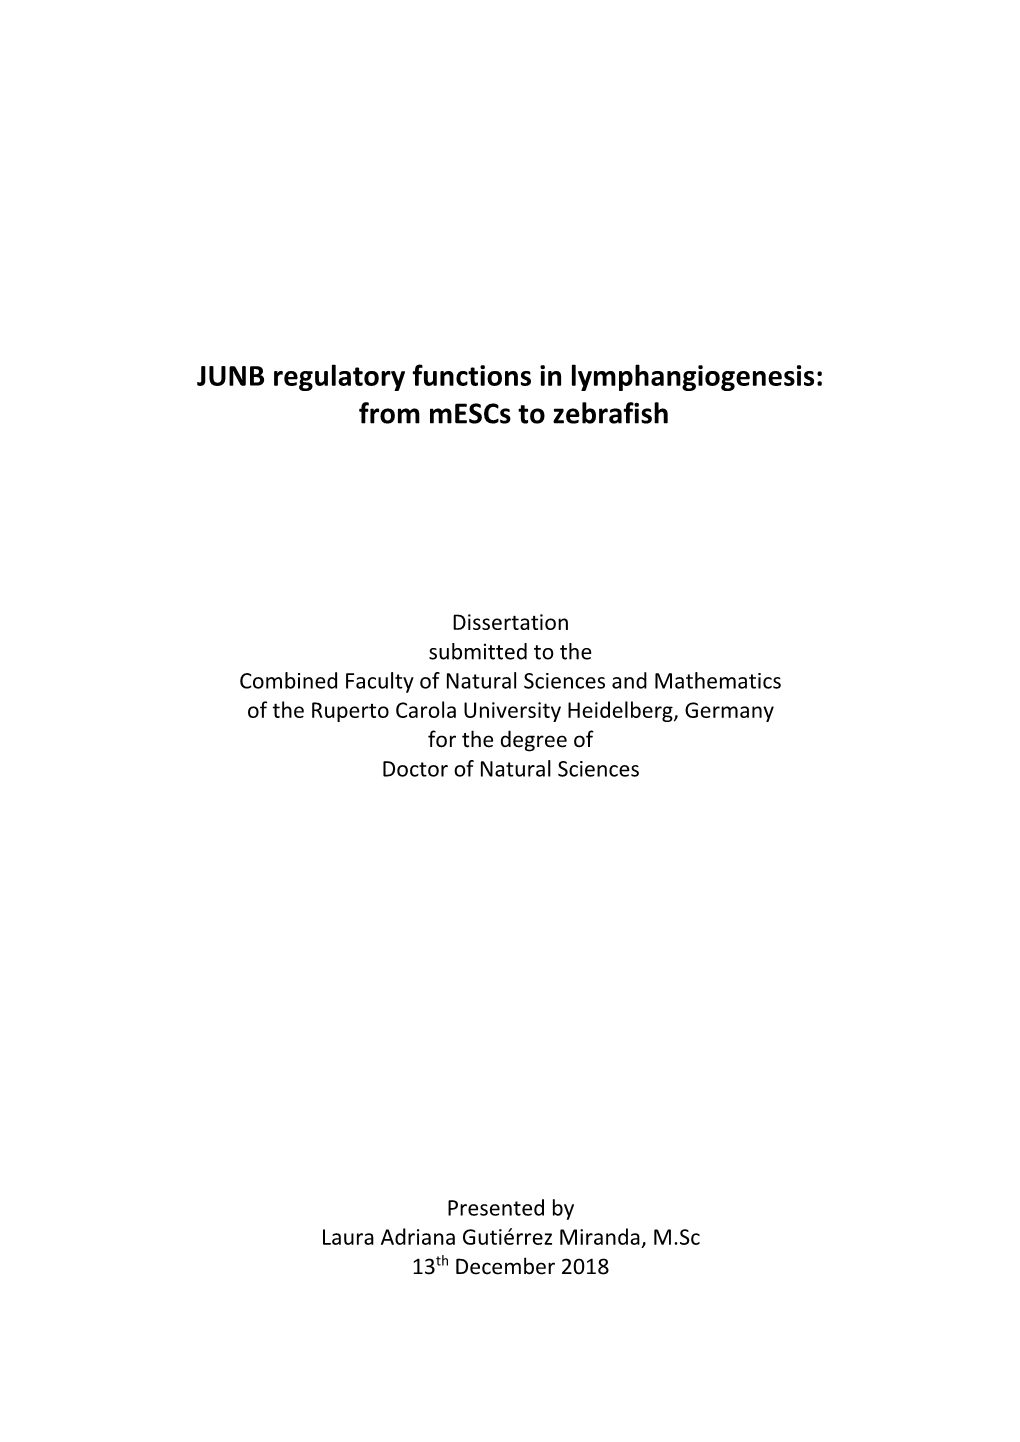 JUNB Regulatory Functions in Lymphangiogenesis: from Mescs to Zebrafish